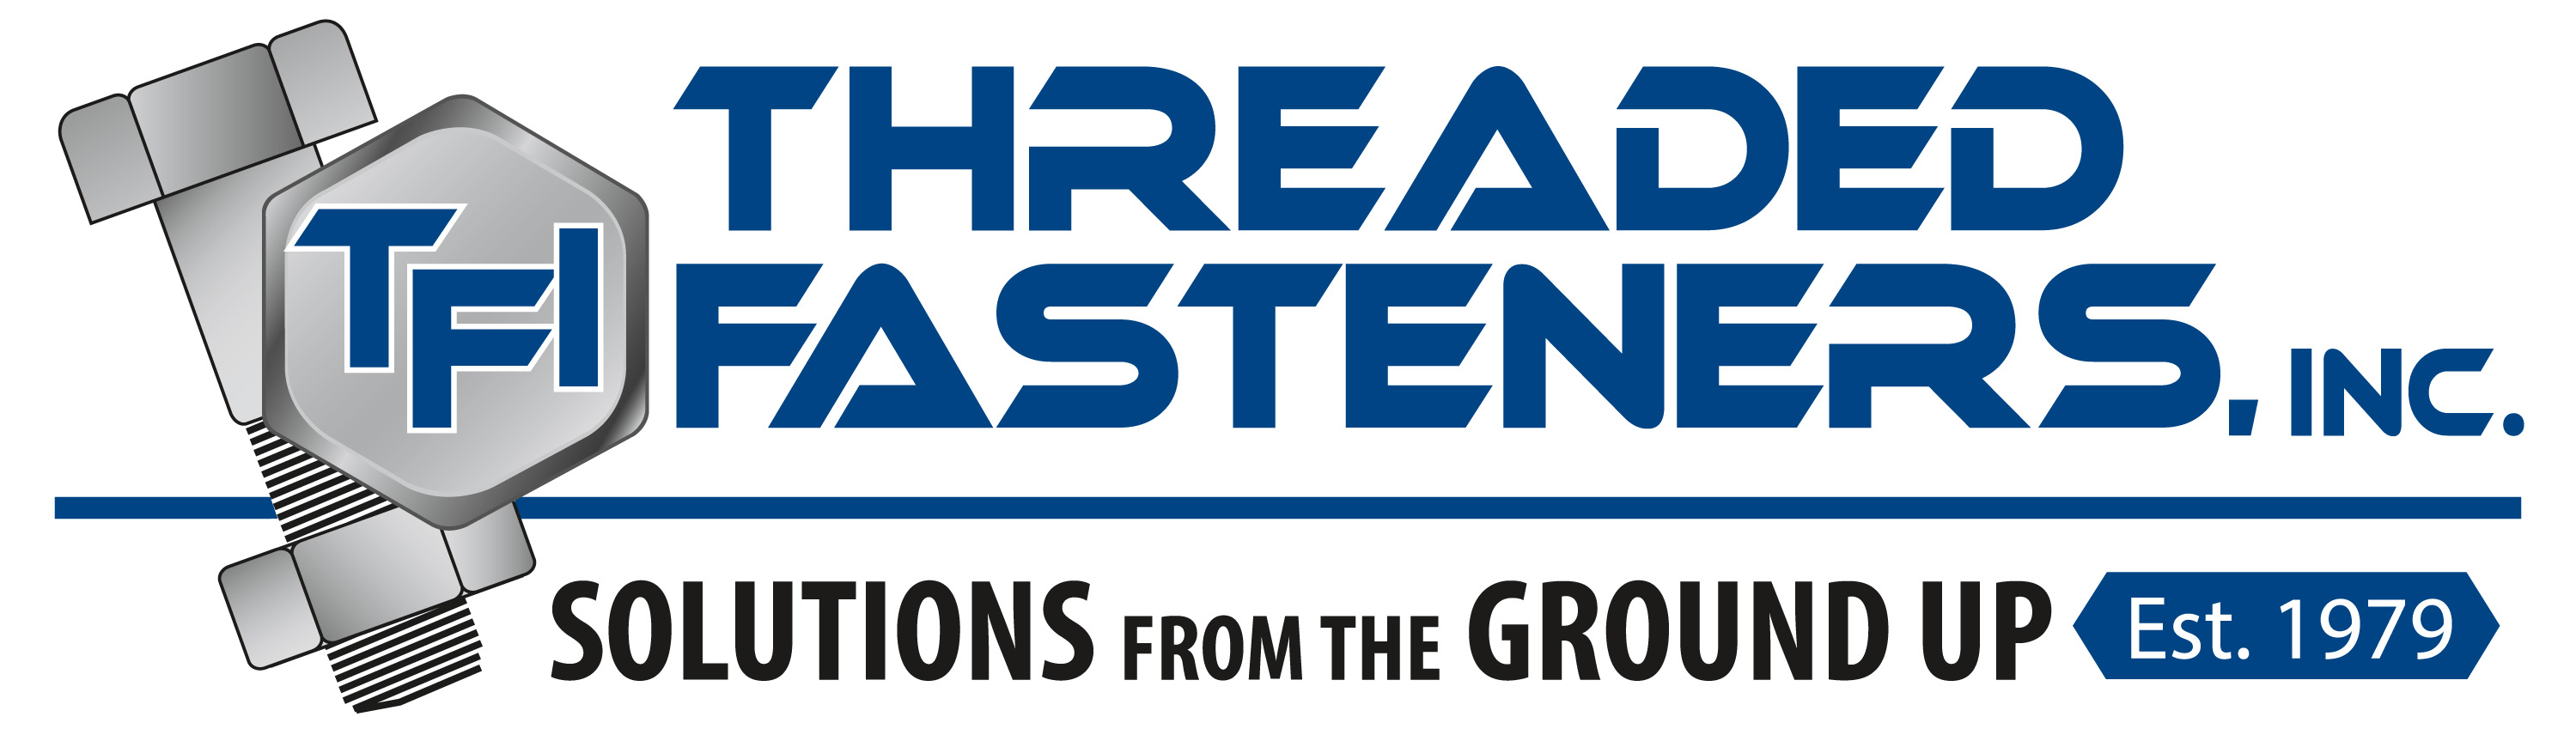 Threaded Fasteners, Inc.